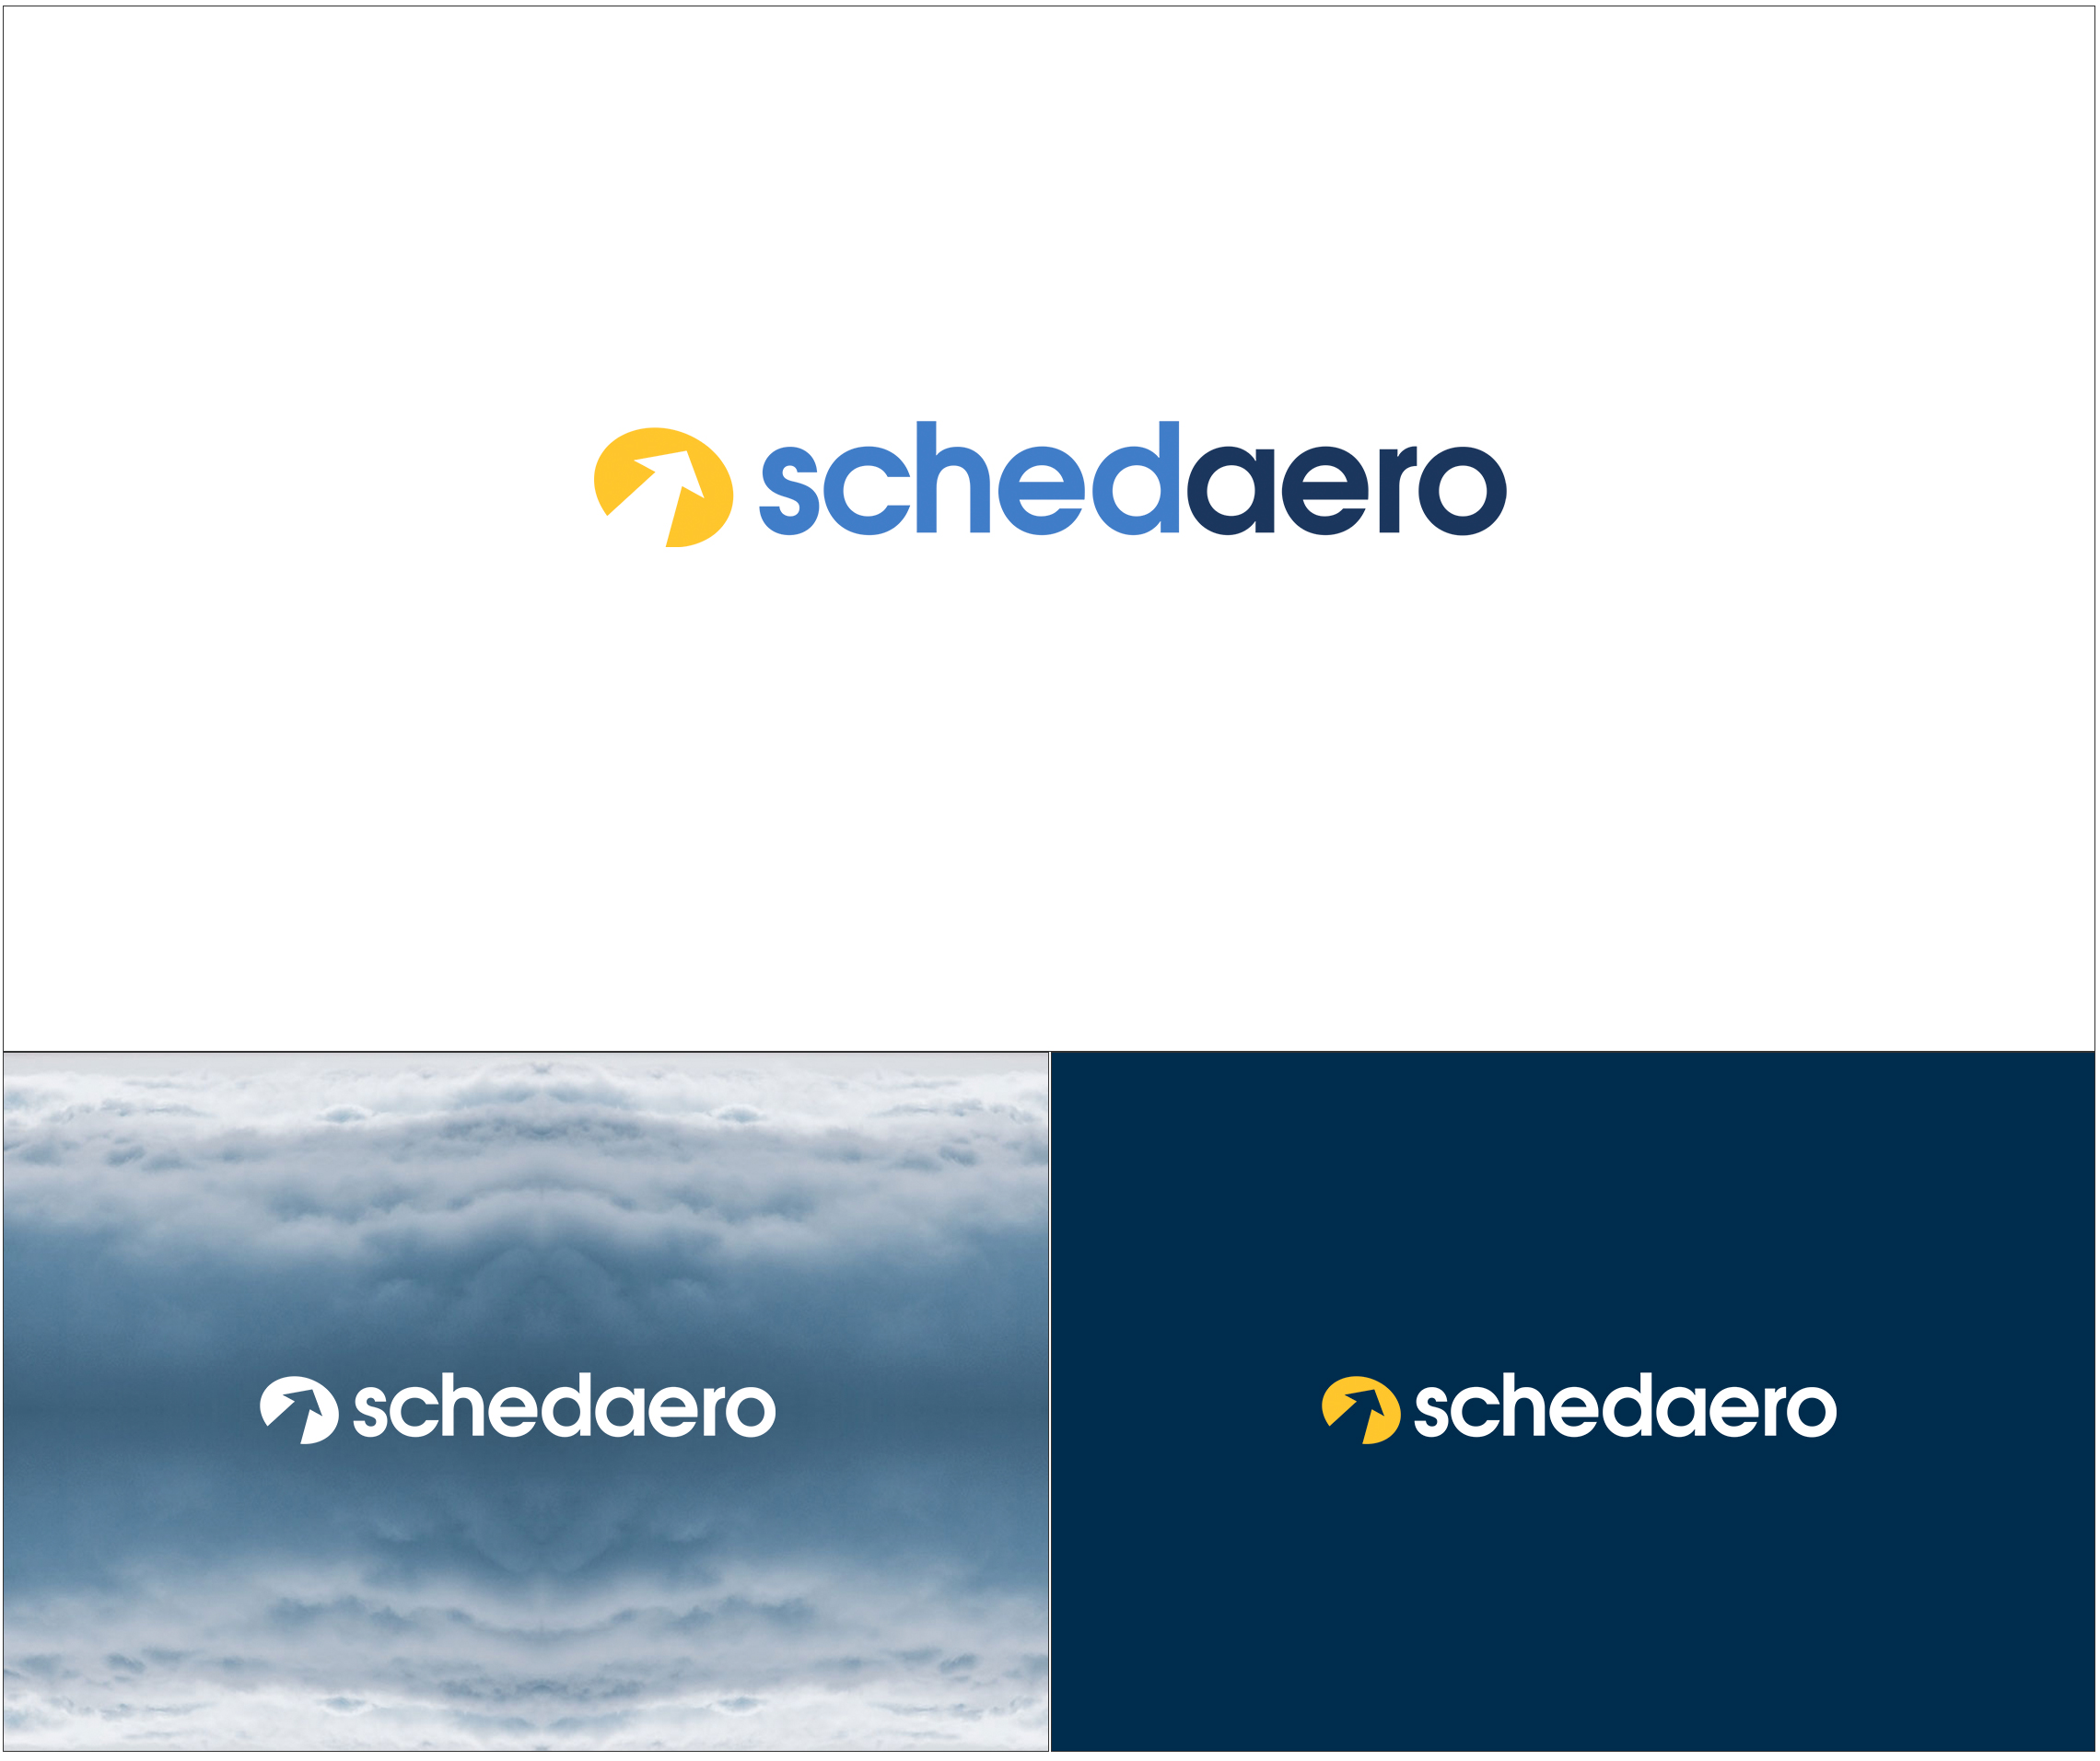 schedaero_logo.jpg